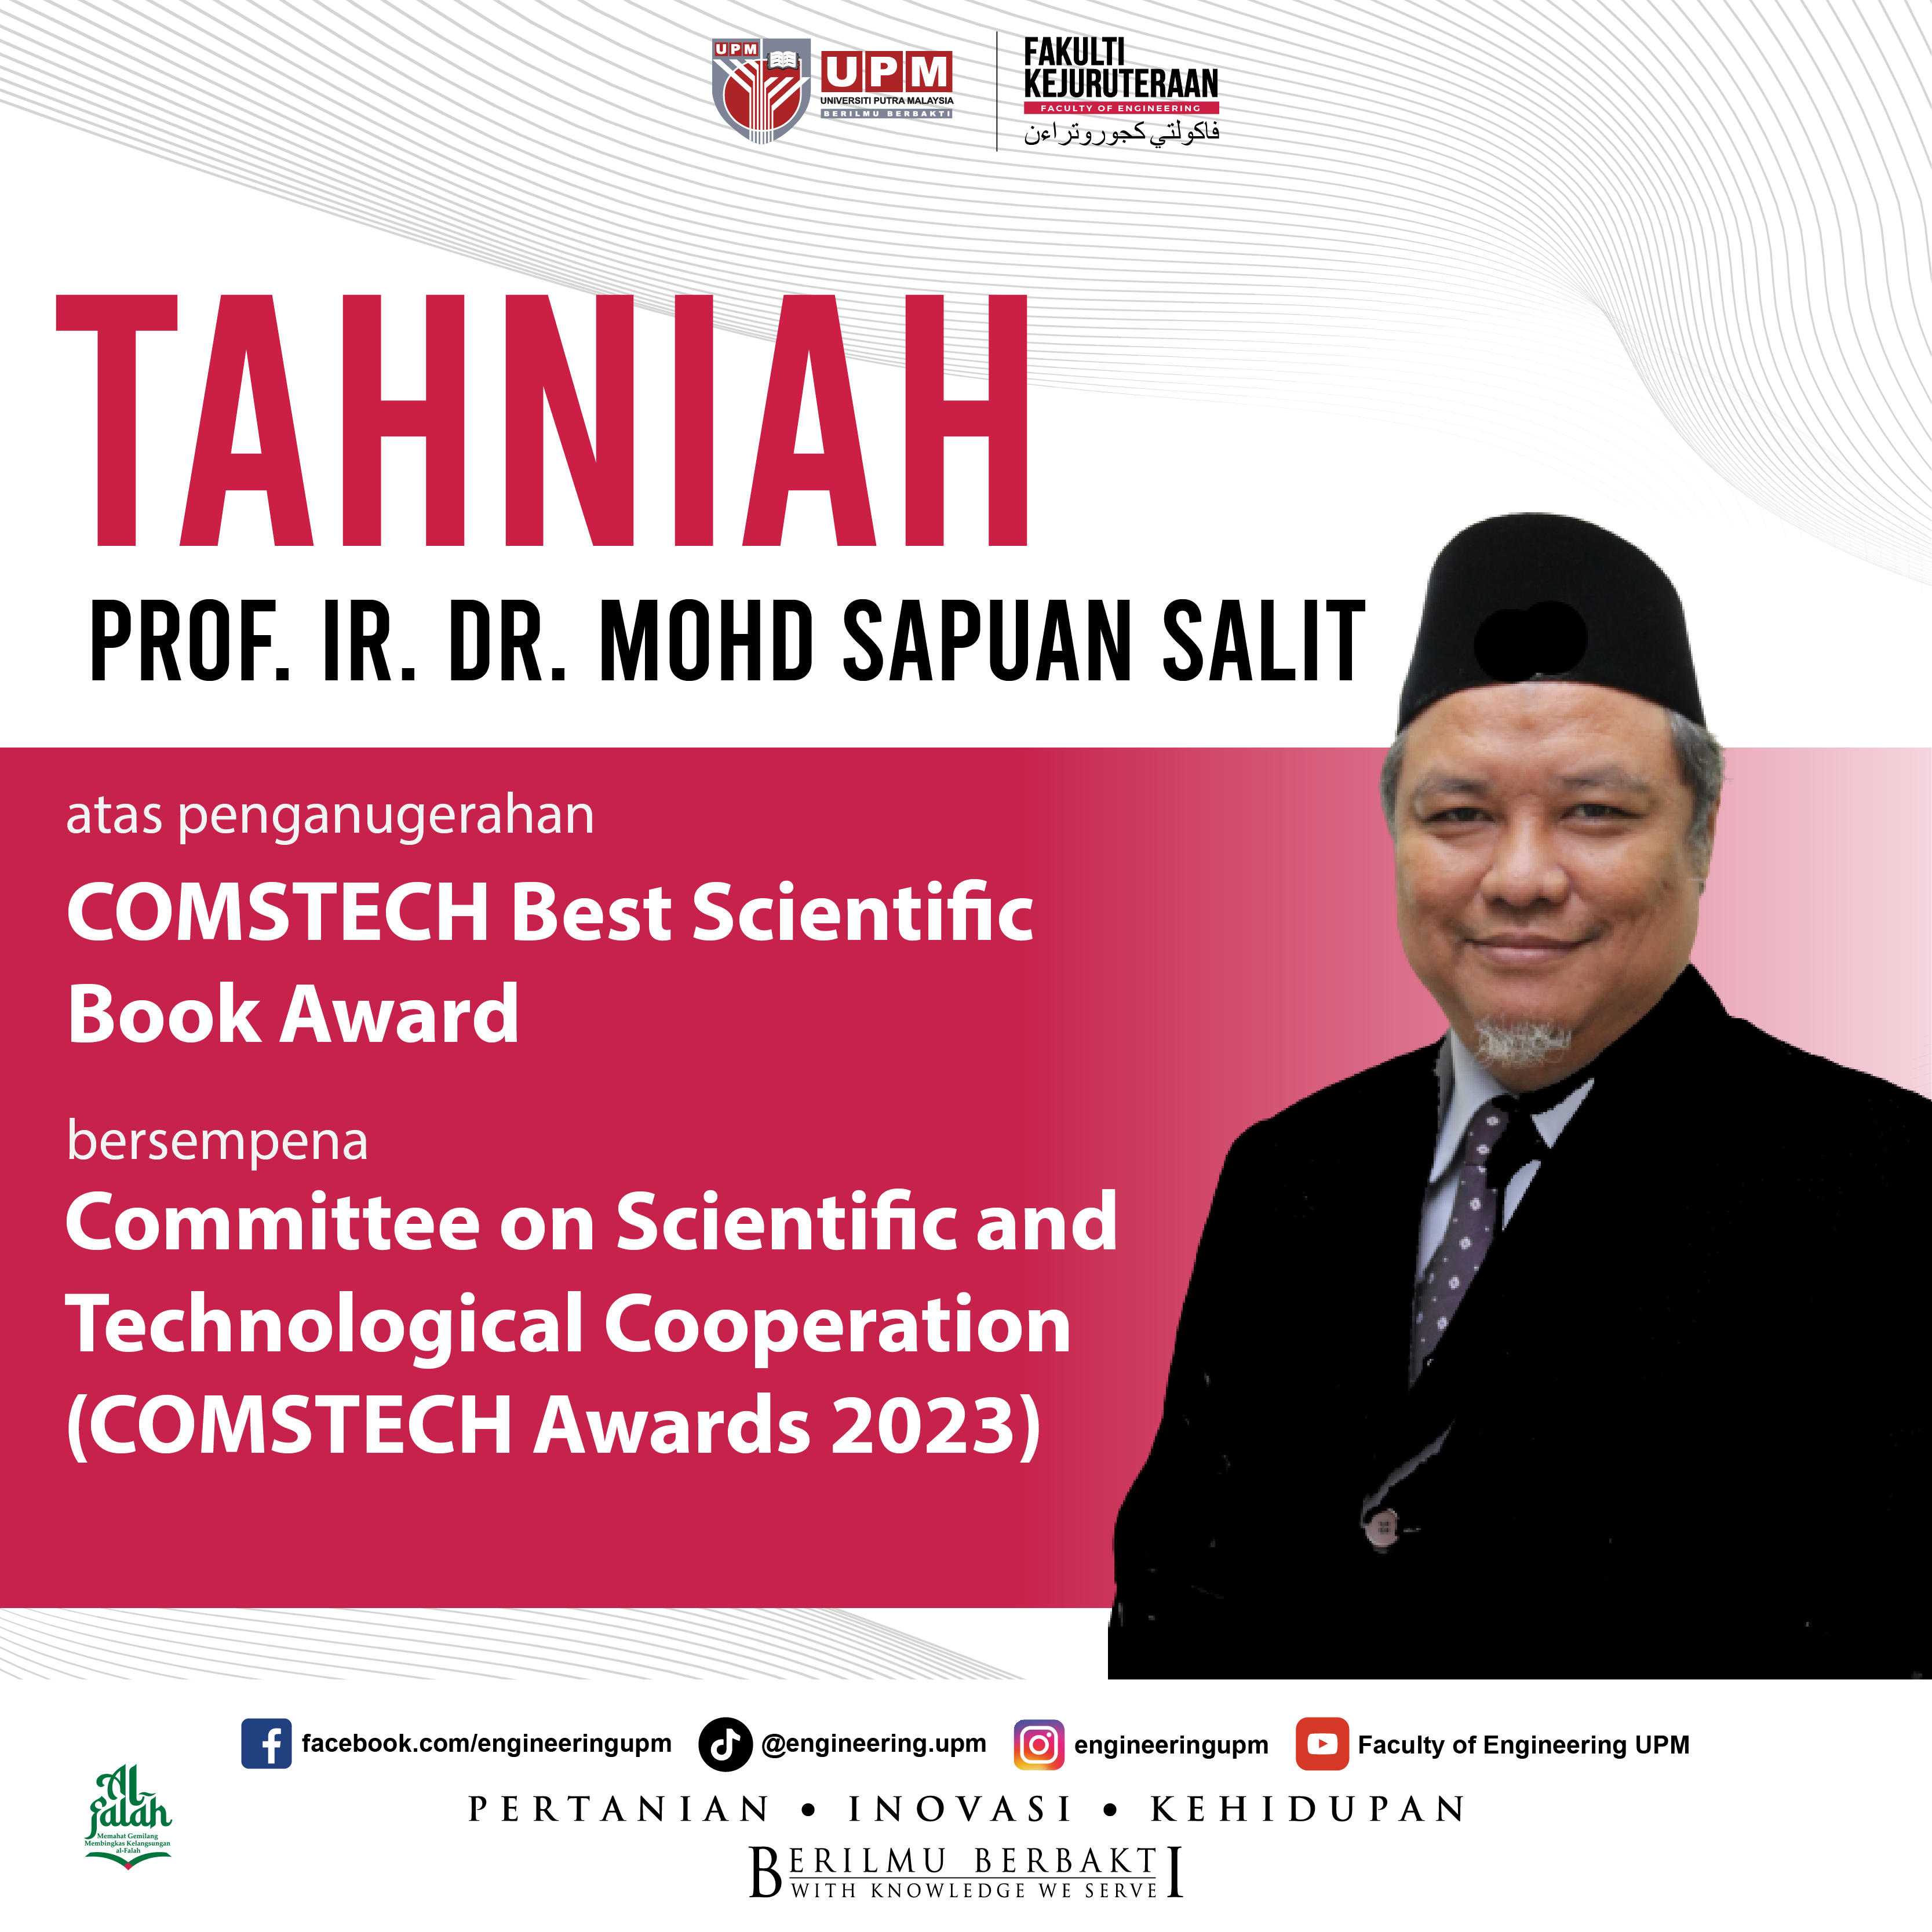 TAHNIAH PROF. IR. DR. MOHD SAPUAN SALIT ATAS PENGANUGERAHAN COMSTECH BEST SCIENTIFIC BOOK AWARD